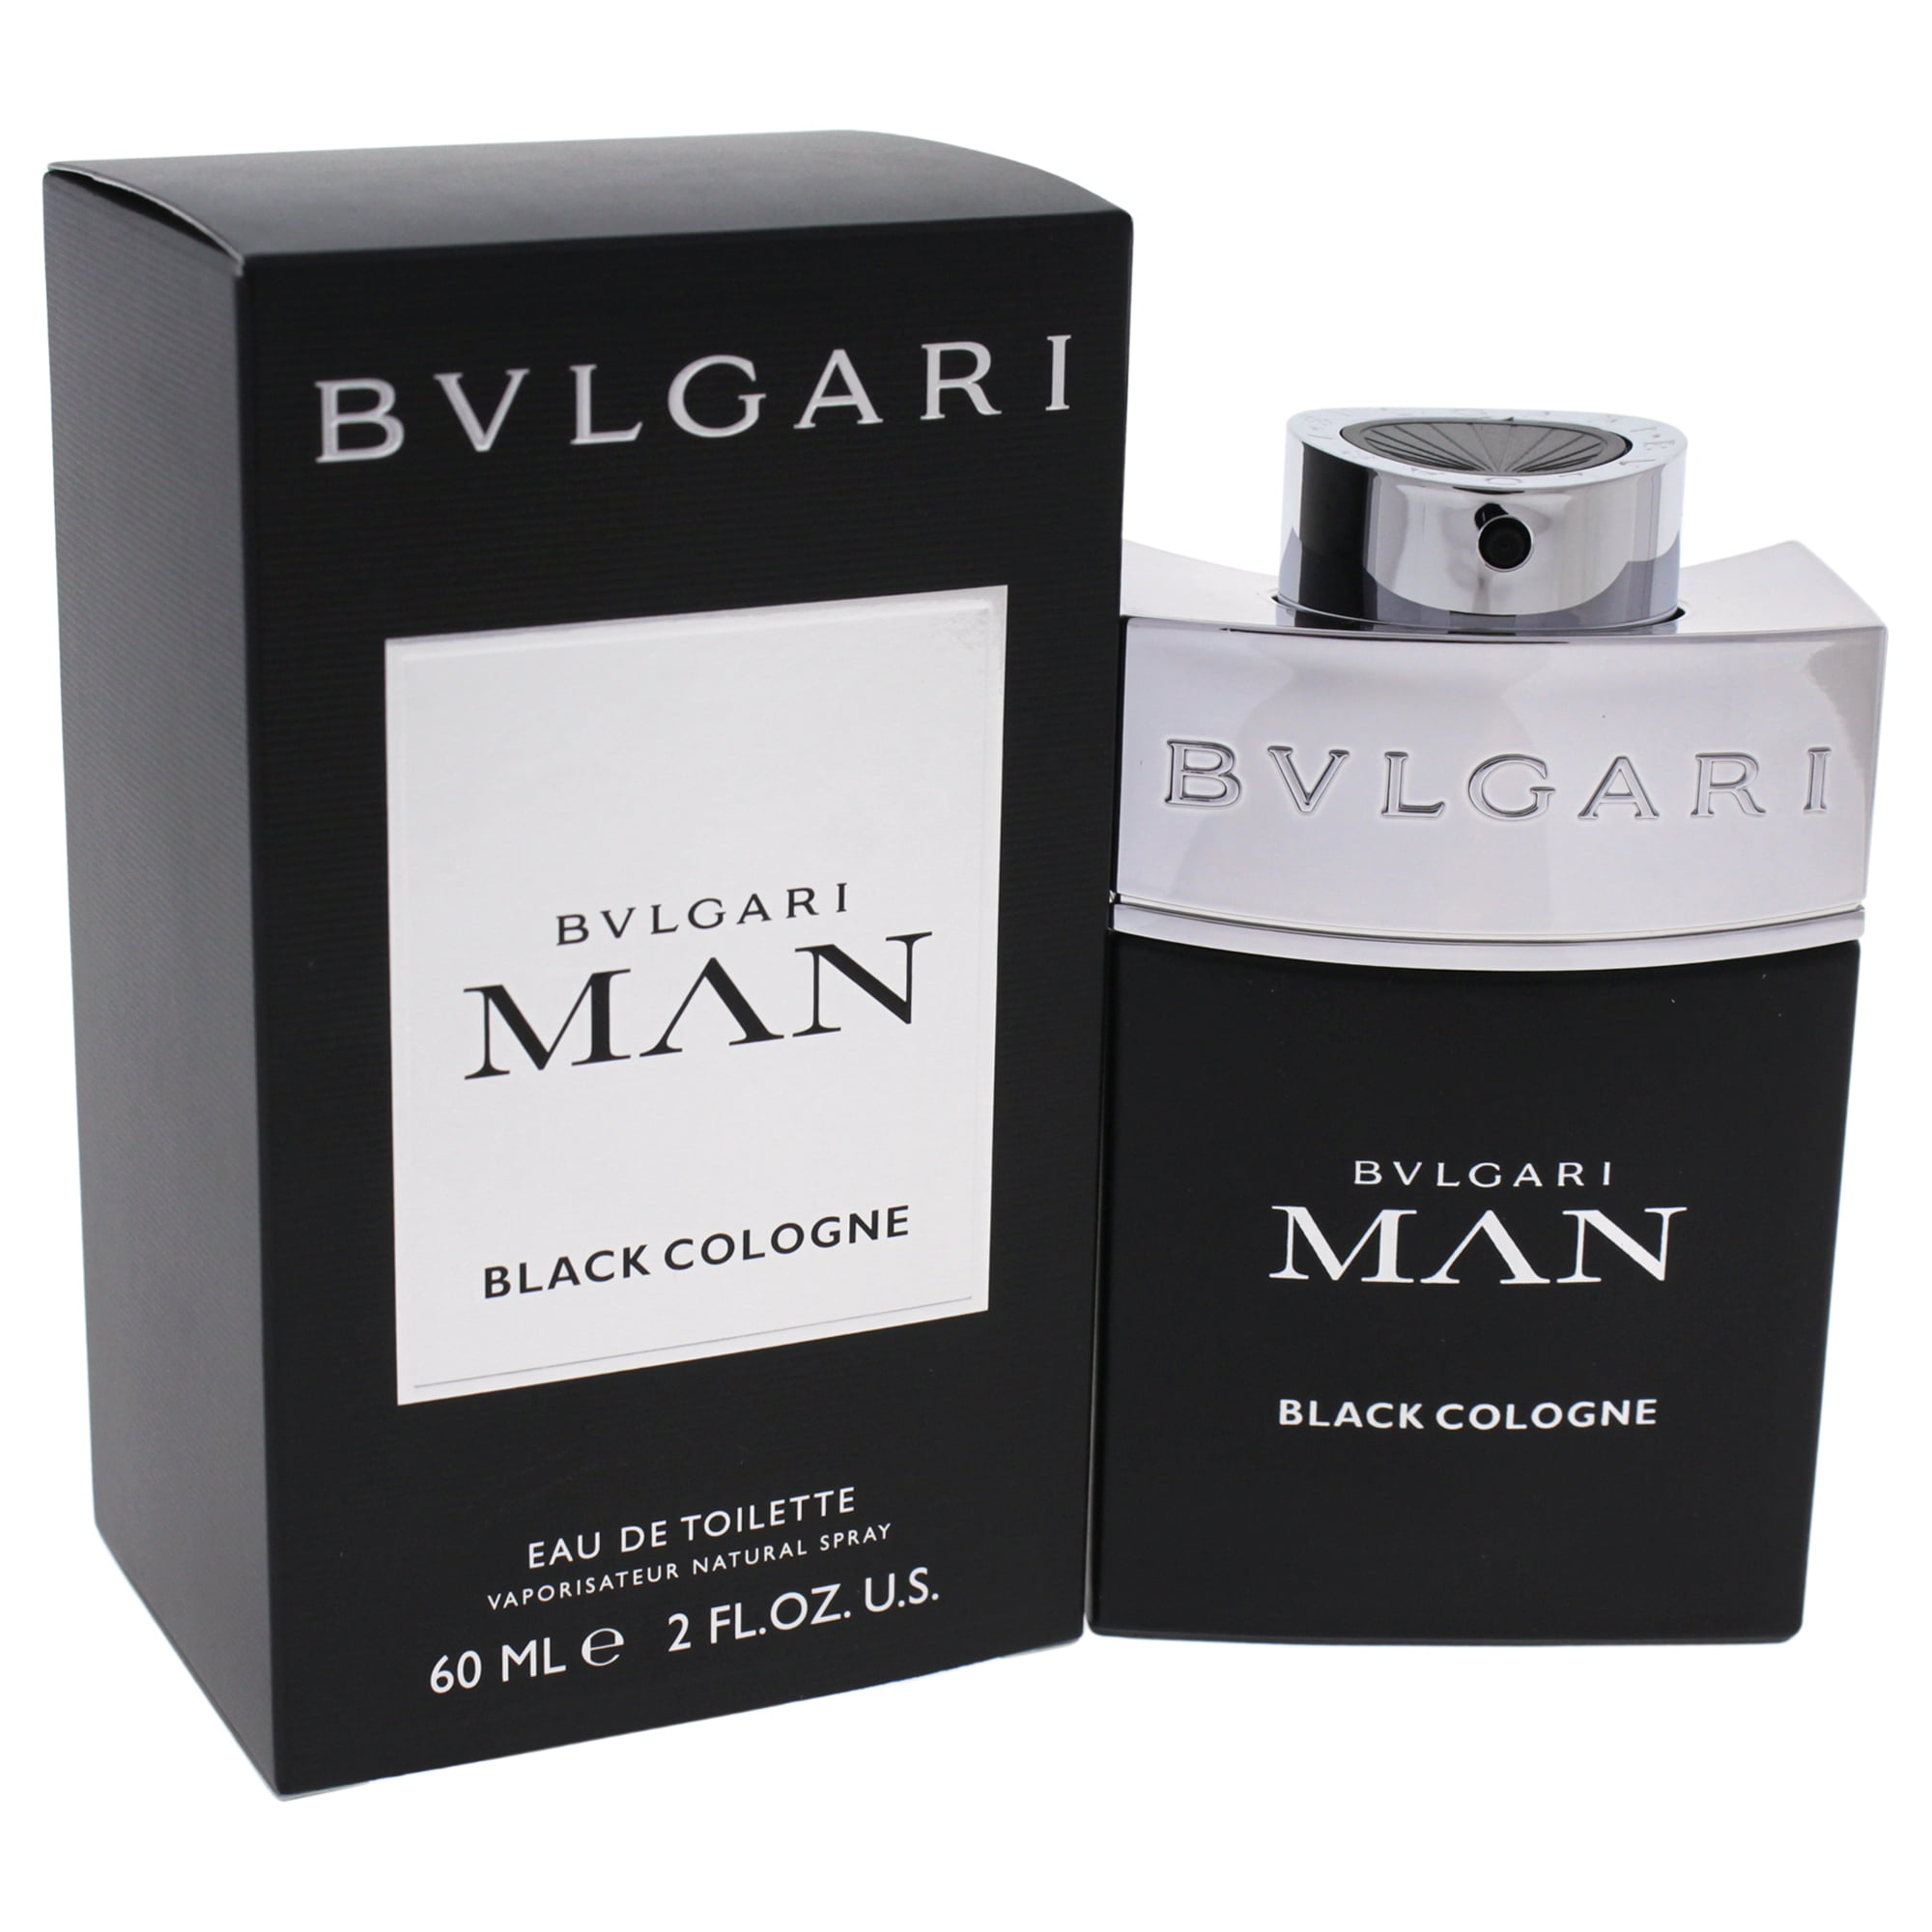 Parfum Bvlgari Man - Homecare24